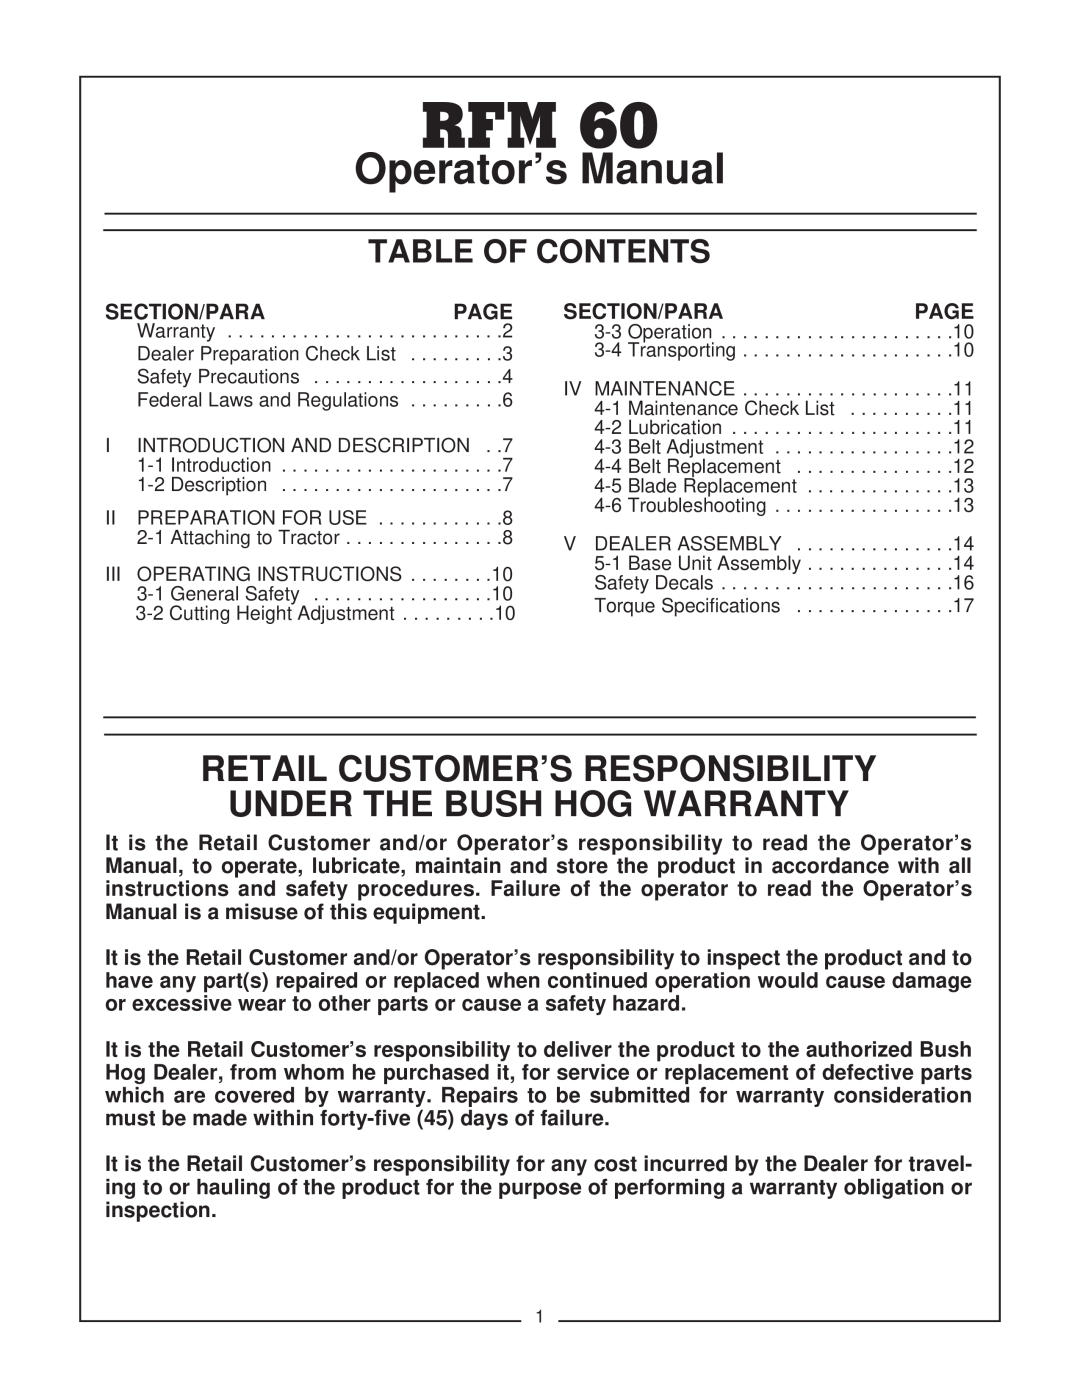 Bush Hog manual Table Of Contents, Operator’sRFM 60Manual, Retail Customer’S Responsibility, Under The Bush Hog Warranty 